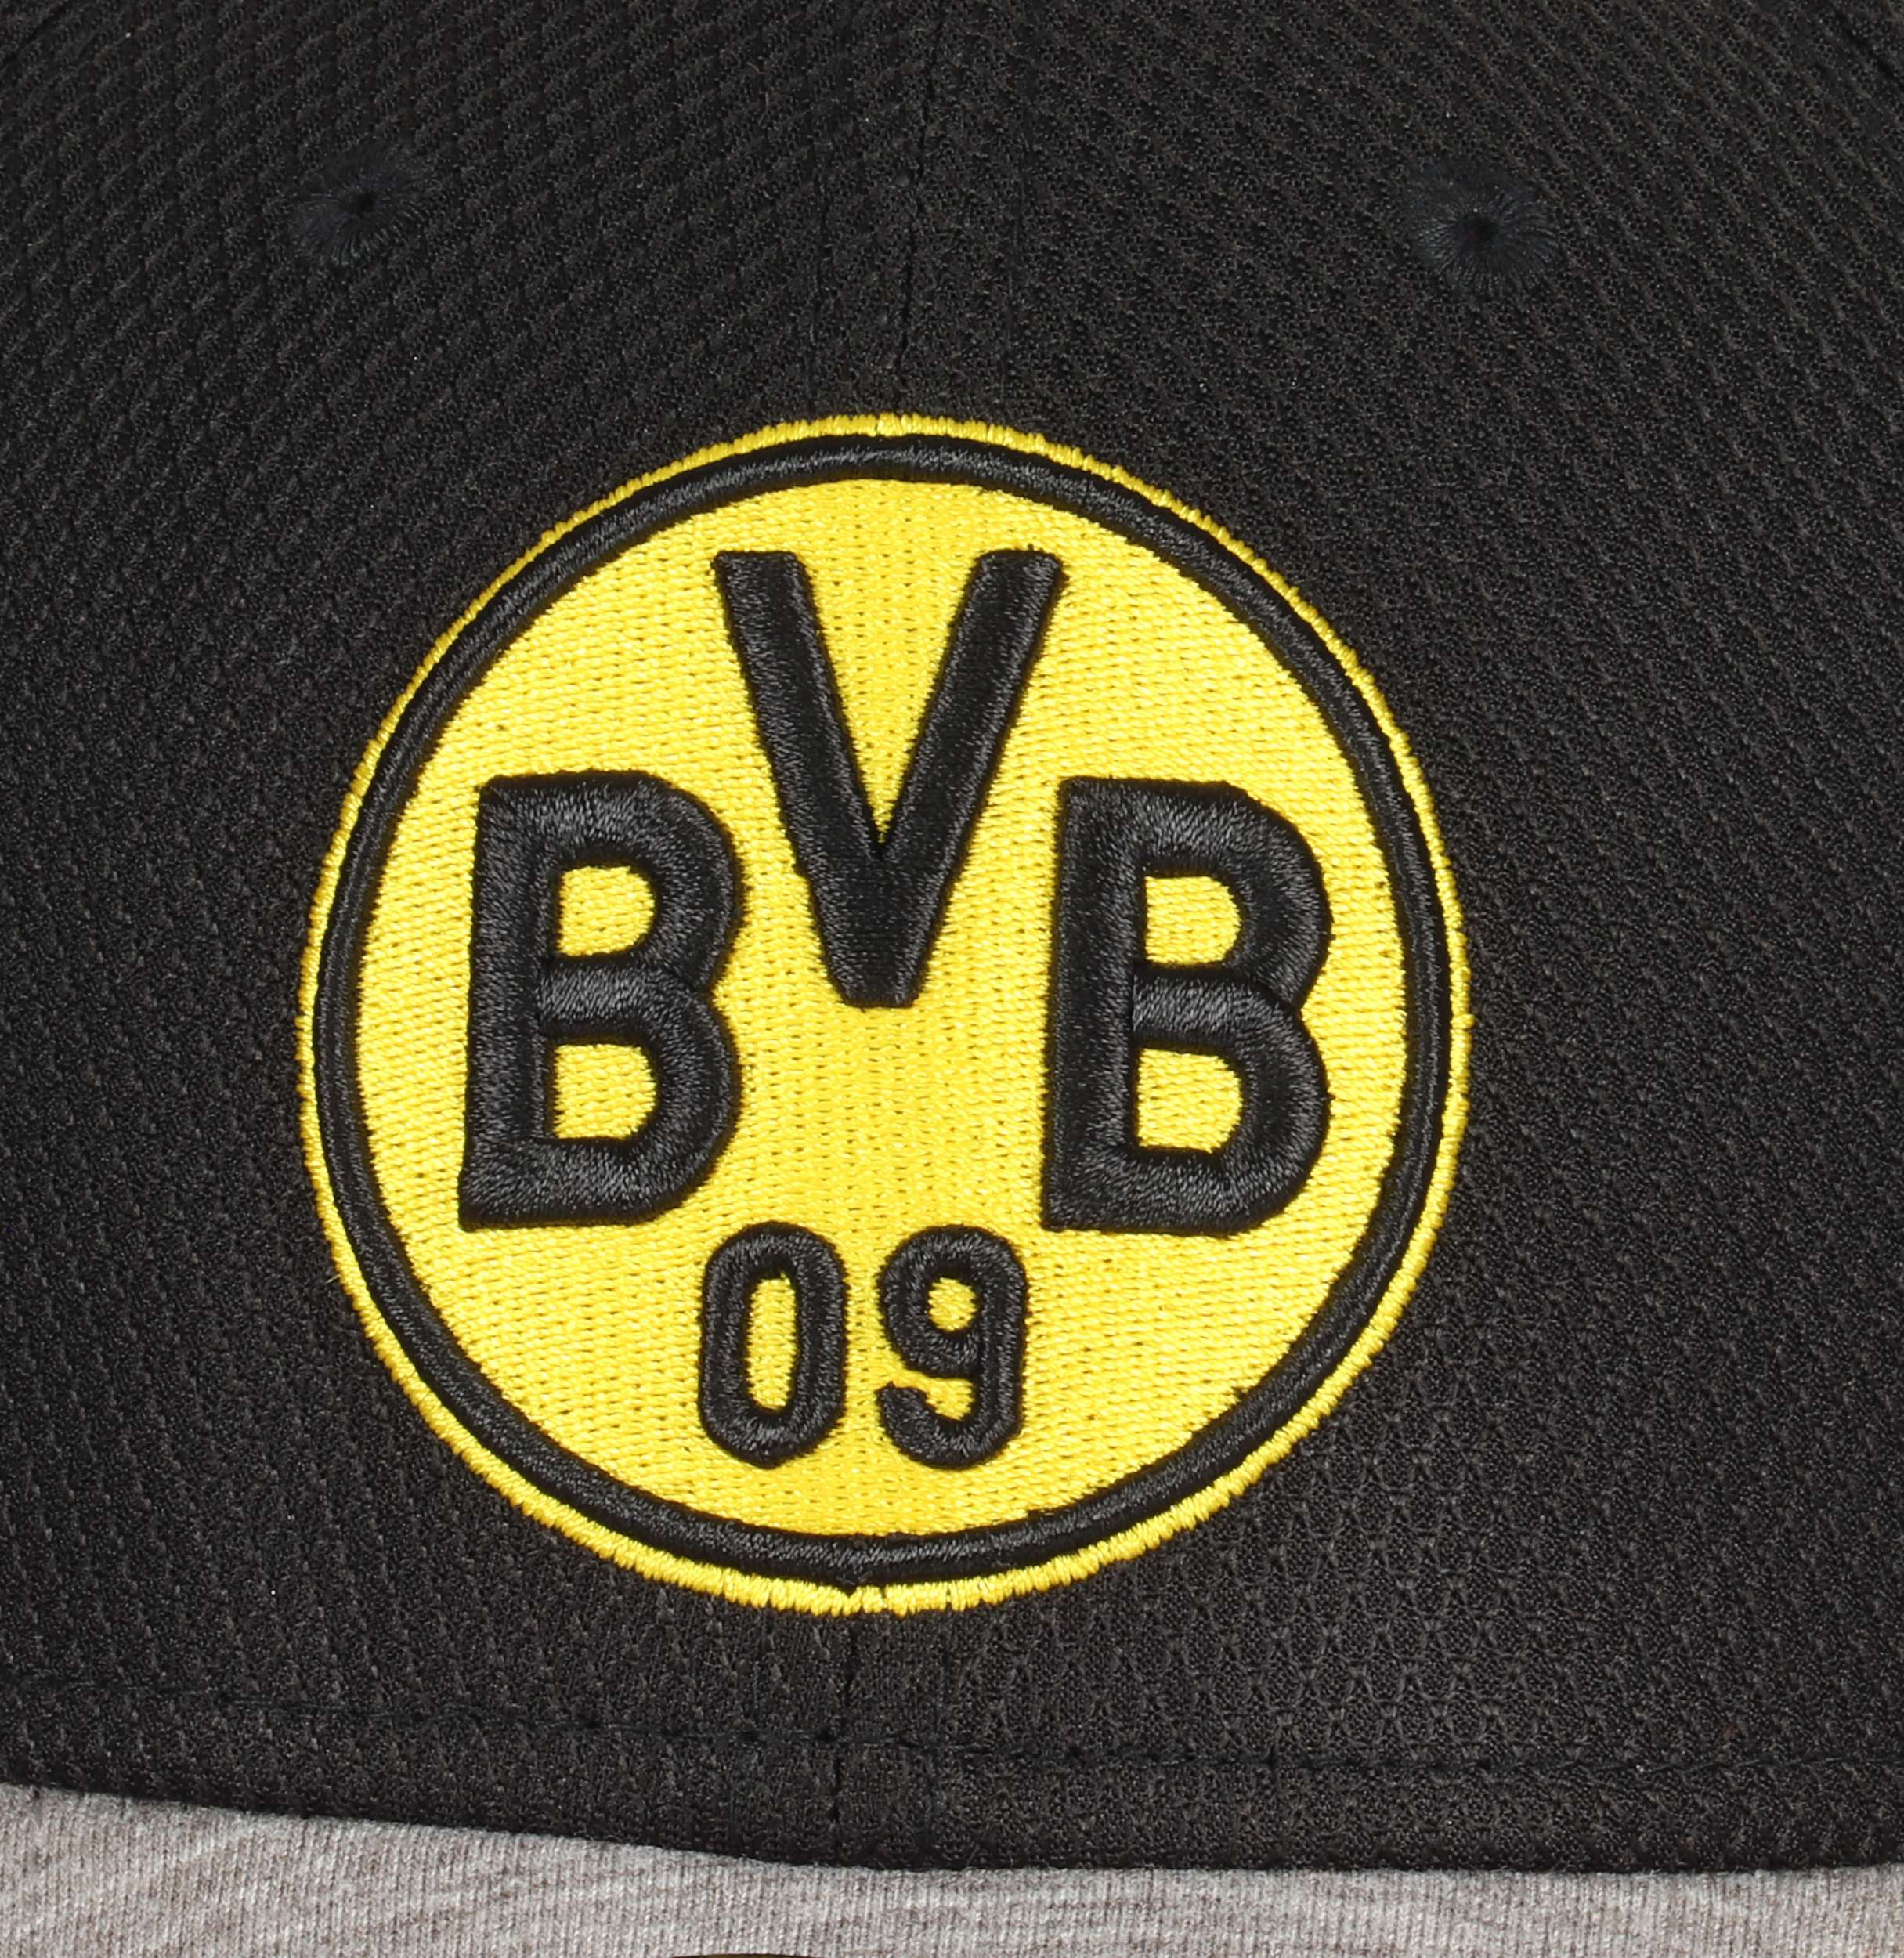 BVB 09 Borussia Dortmund Schwarz Grau Verstellbare 9Forty Cap New Era